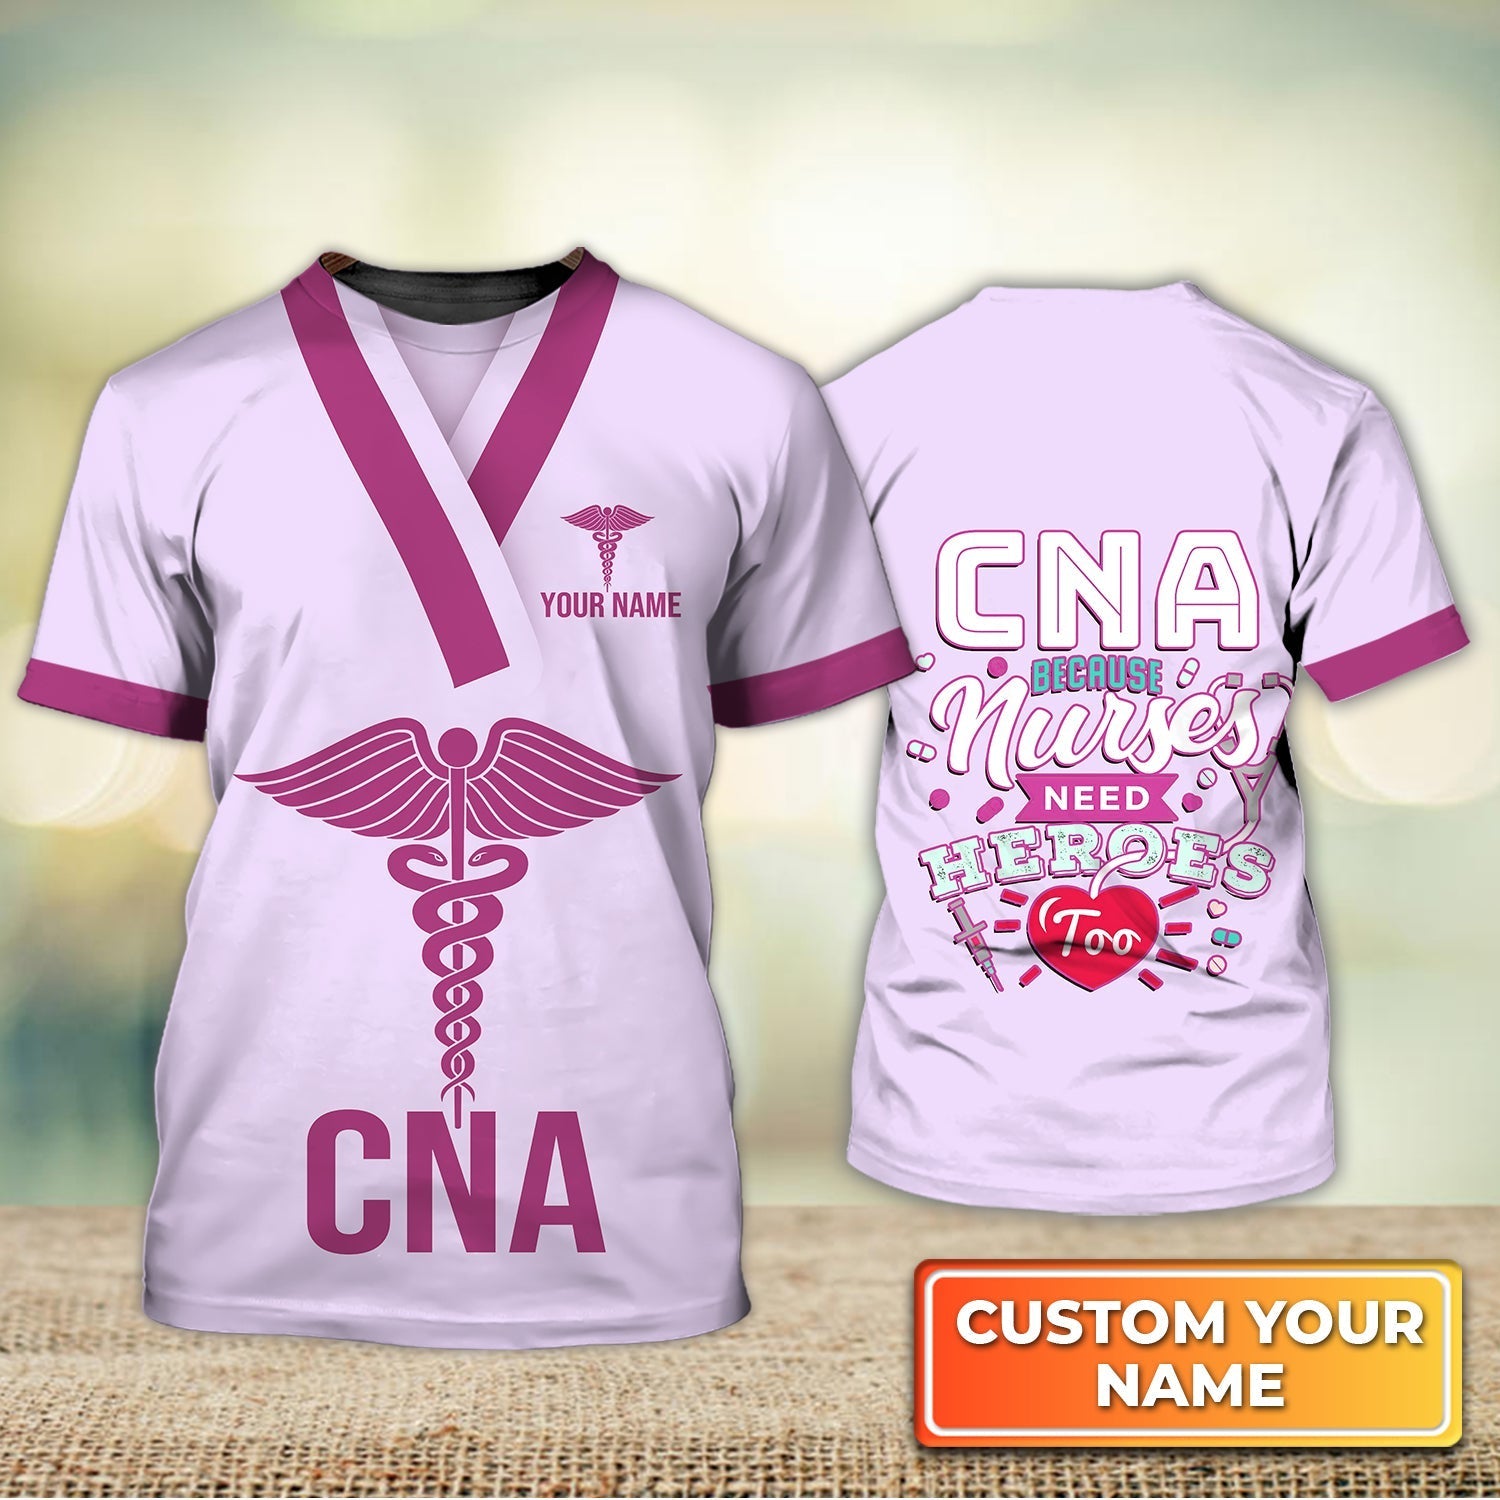 Custom Name Cna Nurse Shirt/ Nurses Need Heroes Too Nurse Life Certified Nursing Assistant Uniform Pink T Shirt